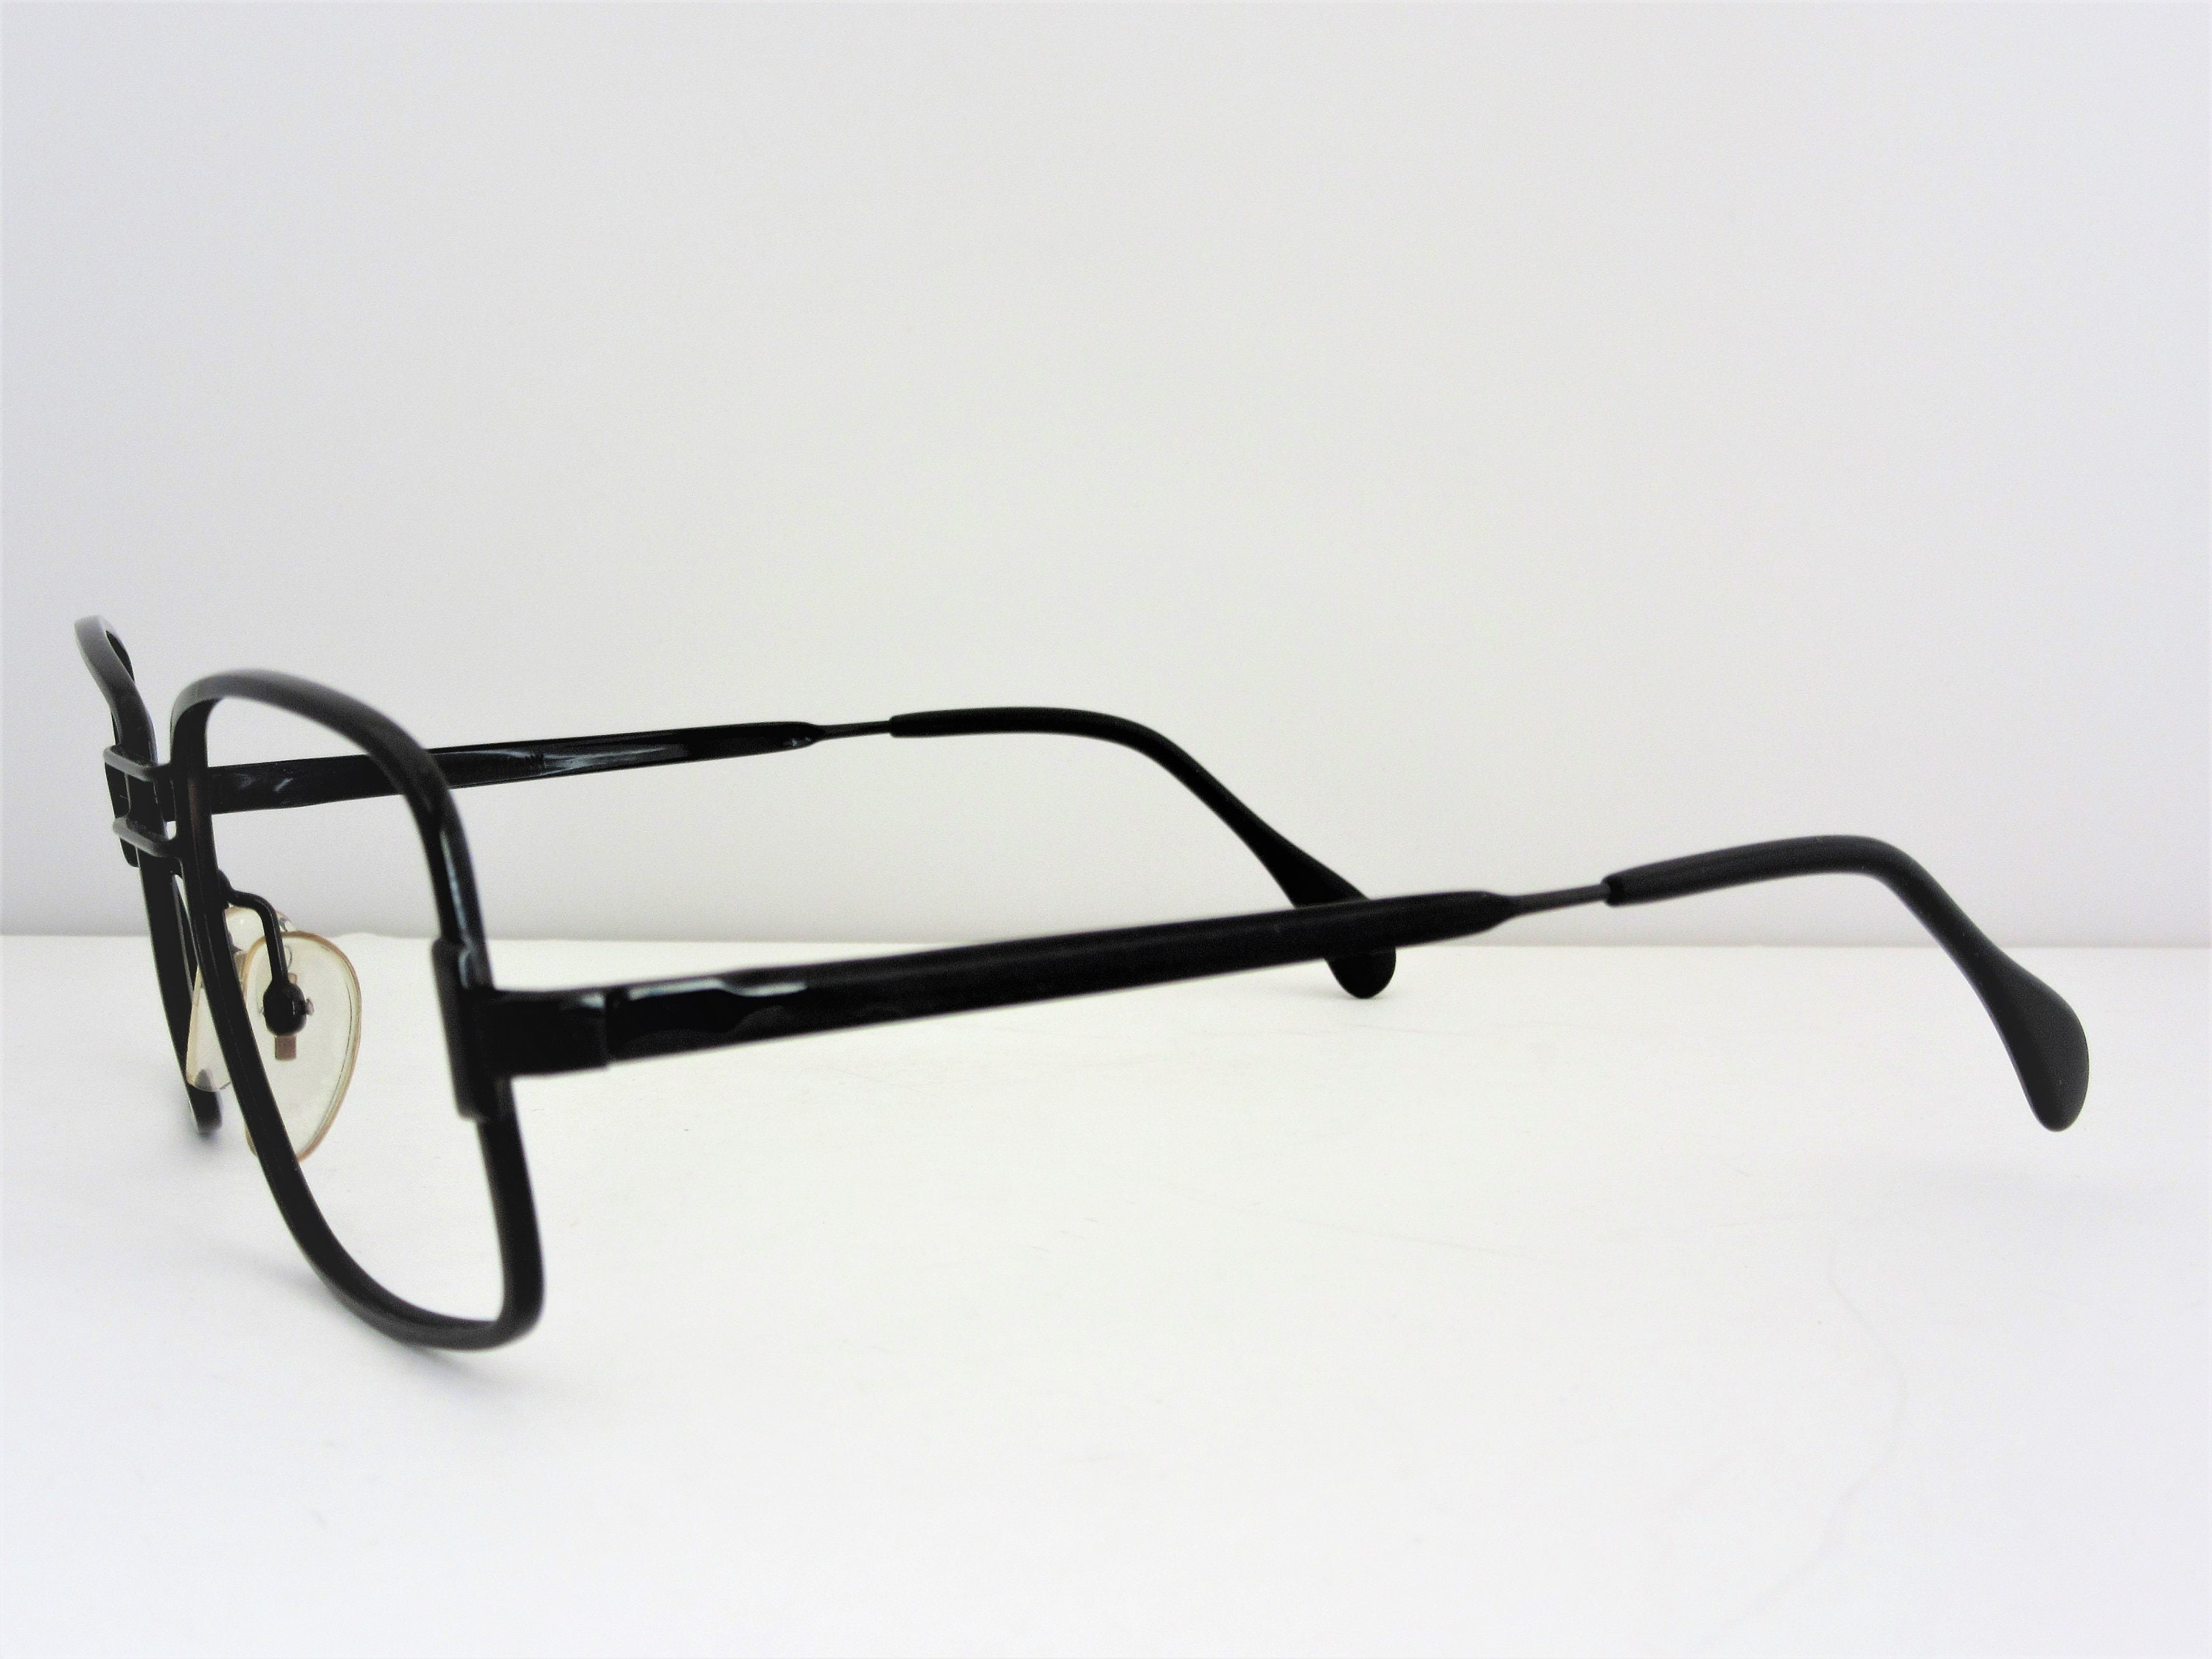 MENRAD Mod. 301 Men's Black Metal Eyeglass Frames Made in Germany 1970s ...